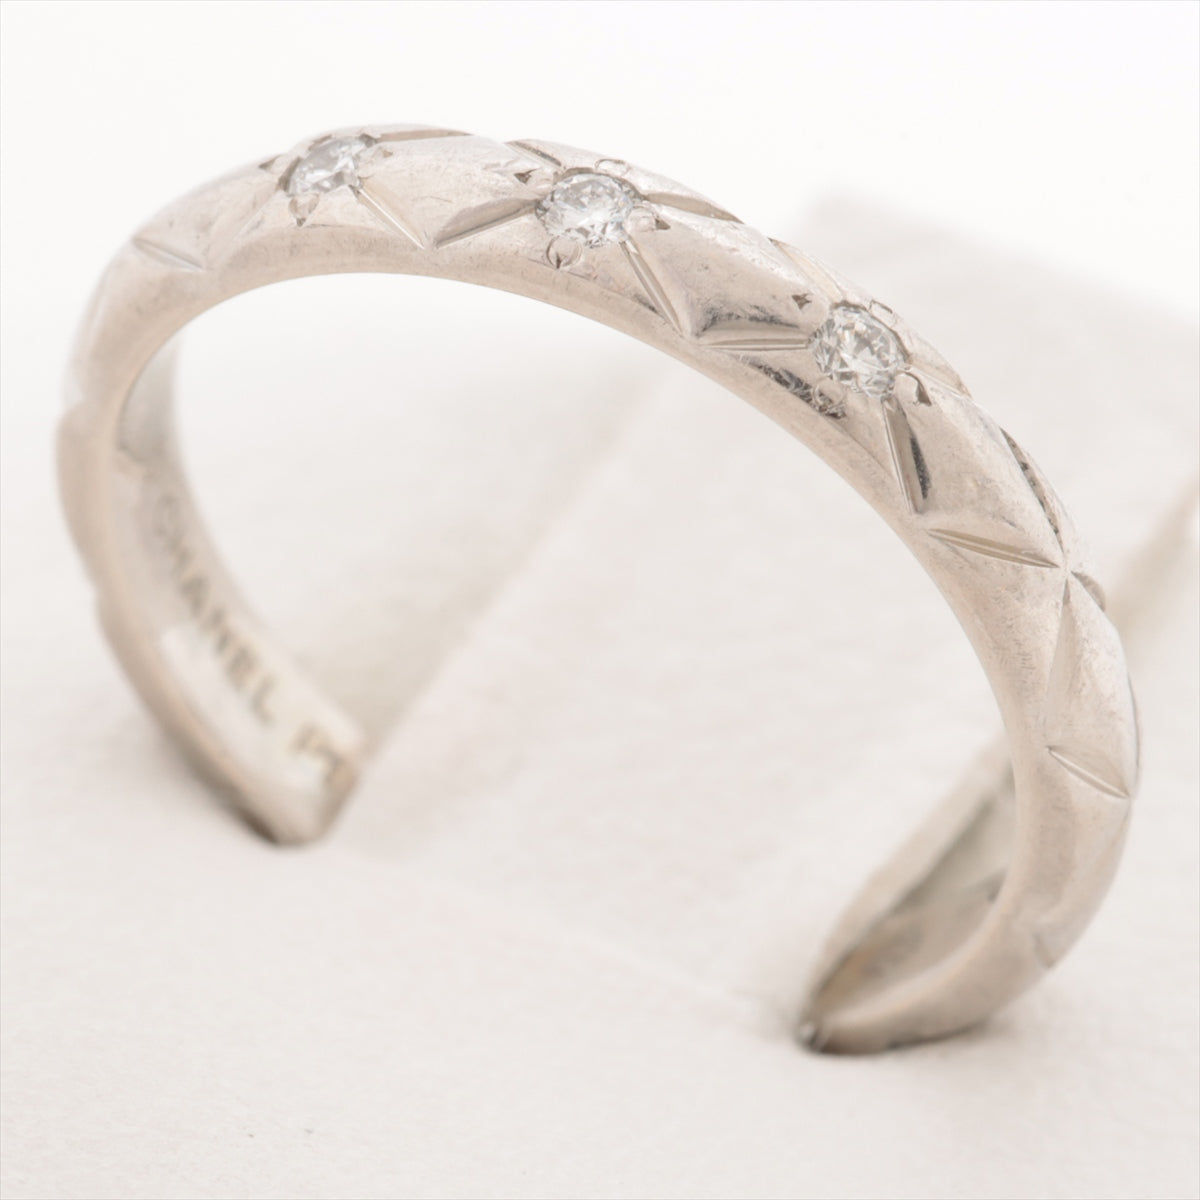 Chanel Matelasse 3P Diamond Ring Pt950 2.9g 46